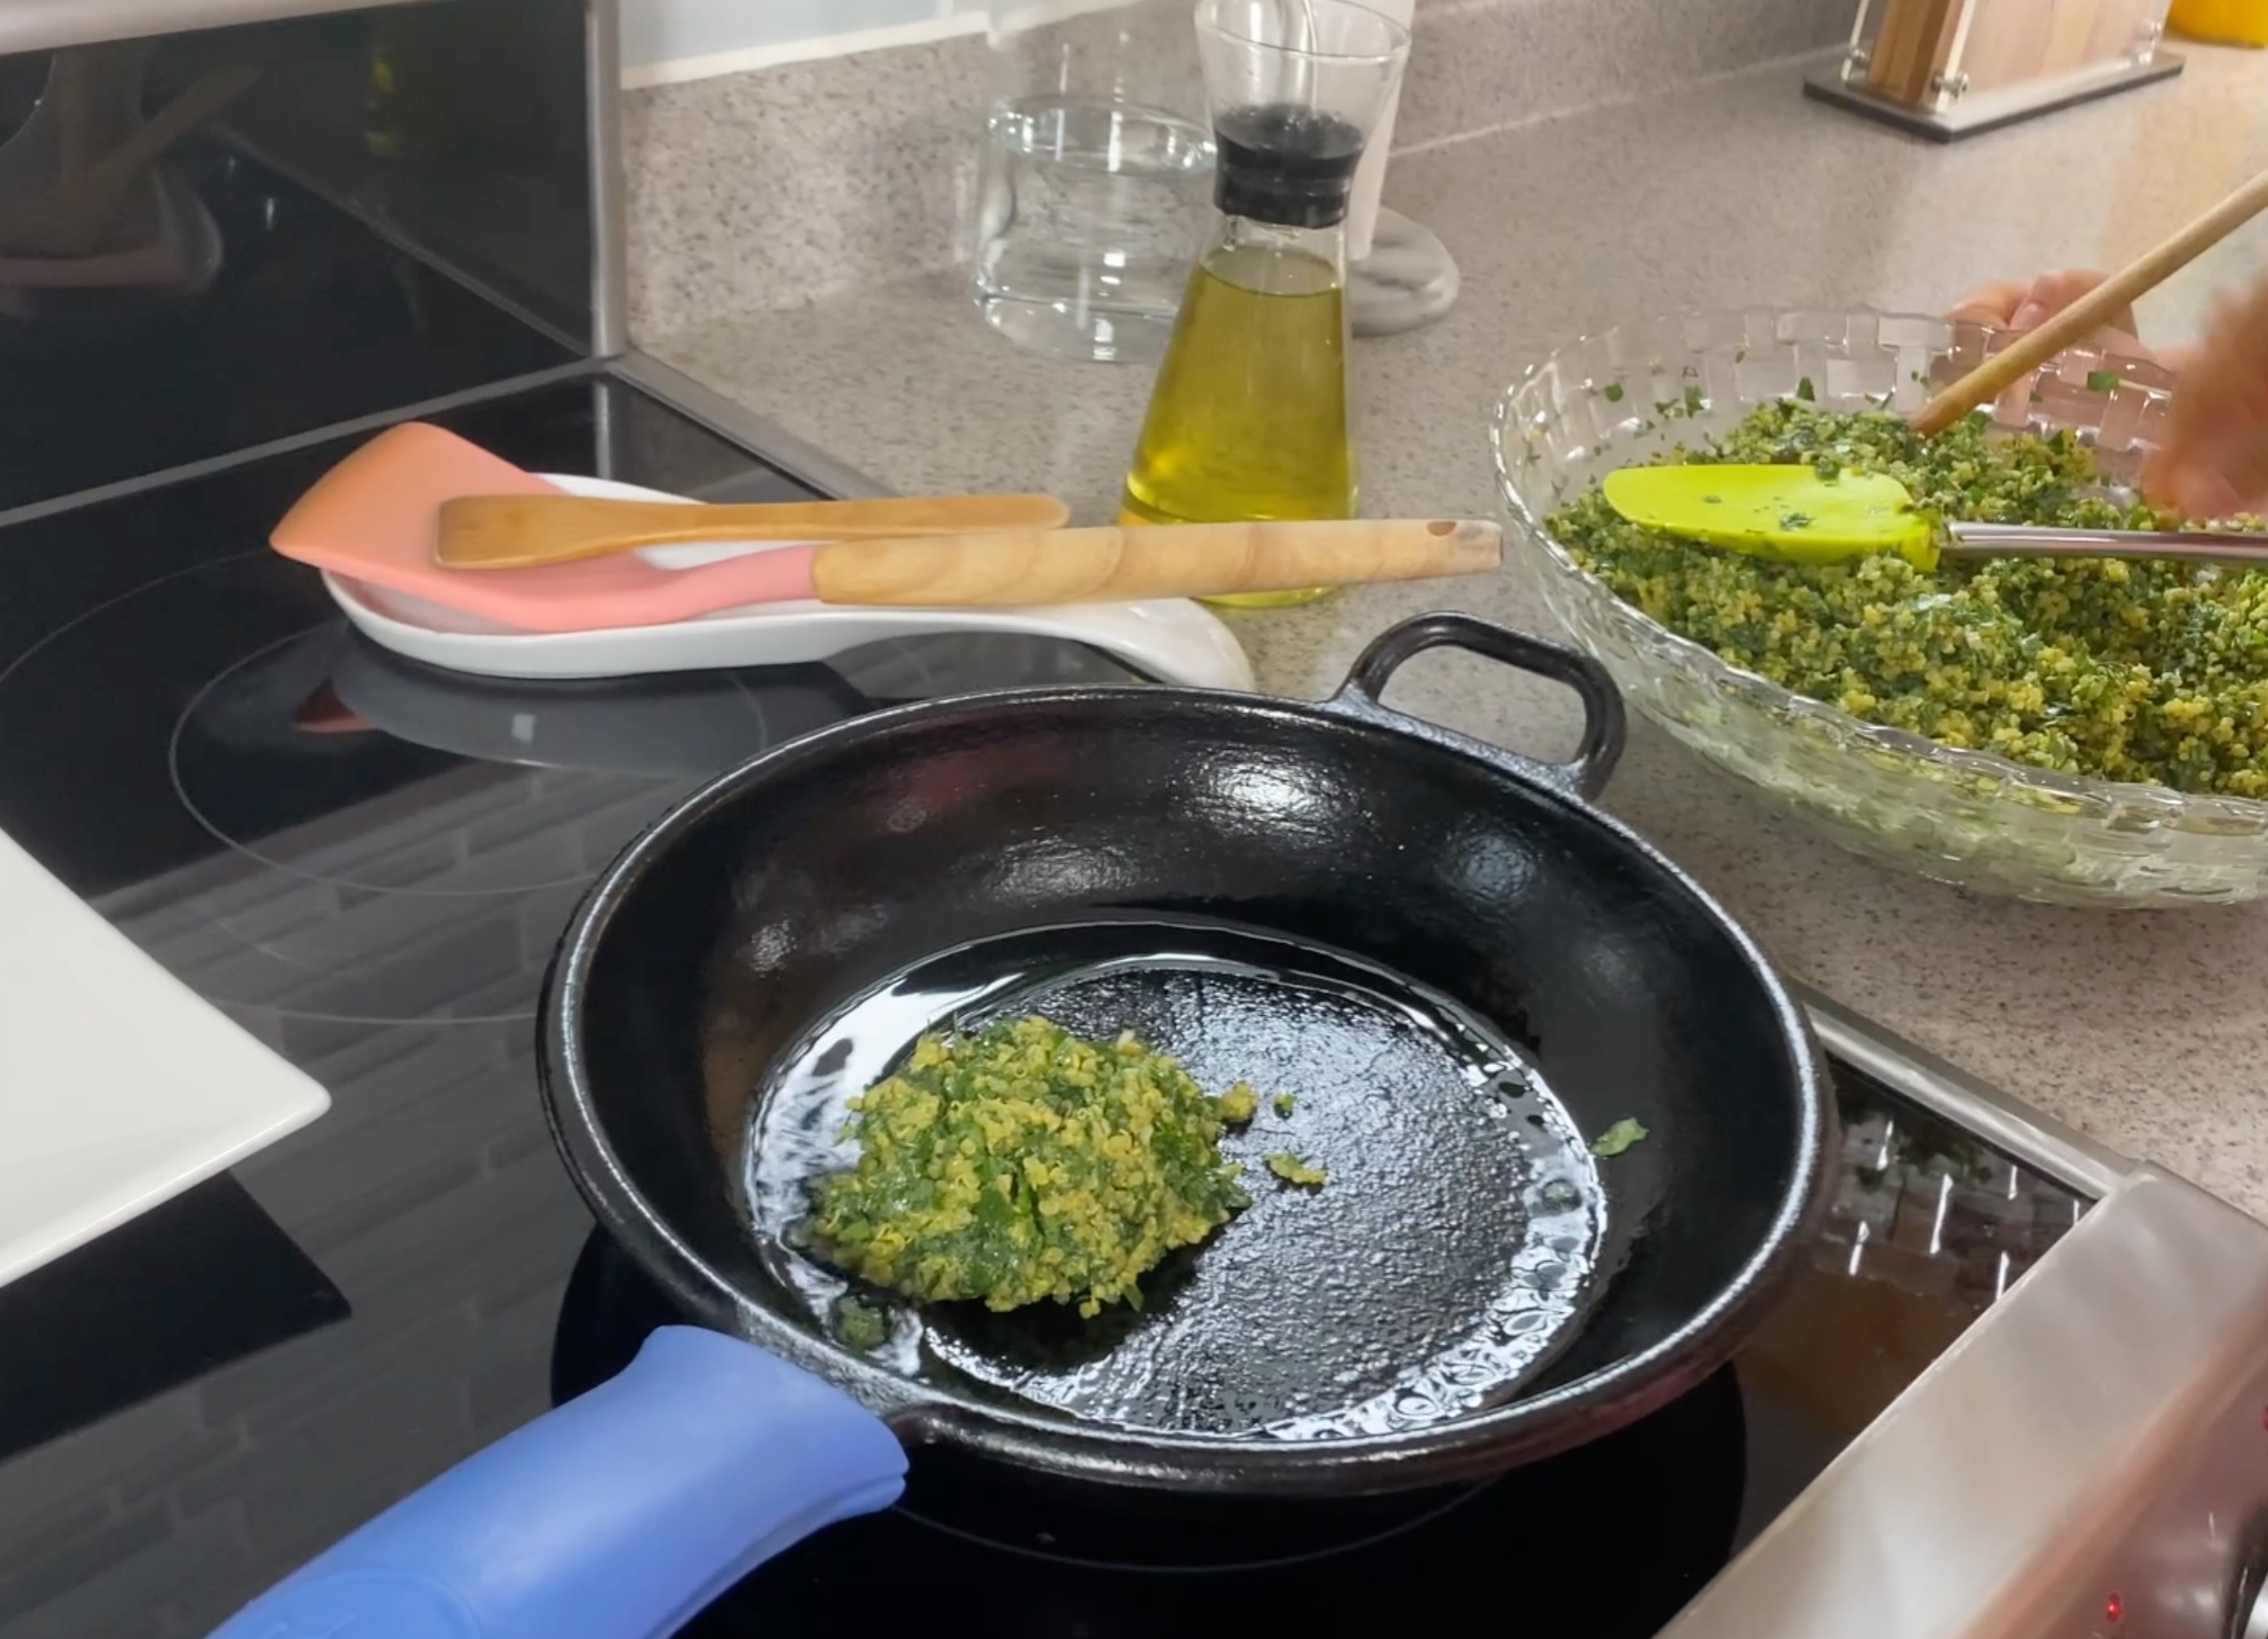 patty frying on pan